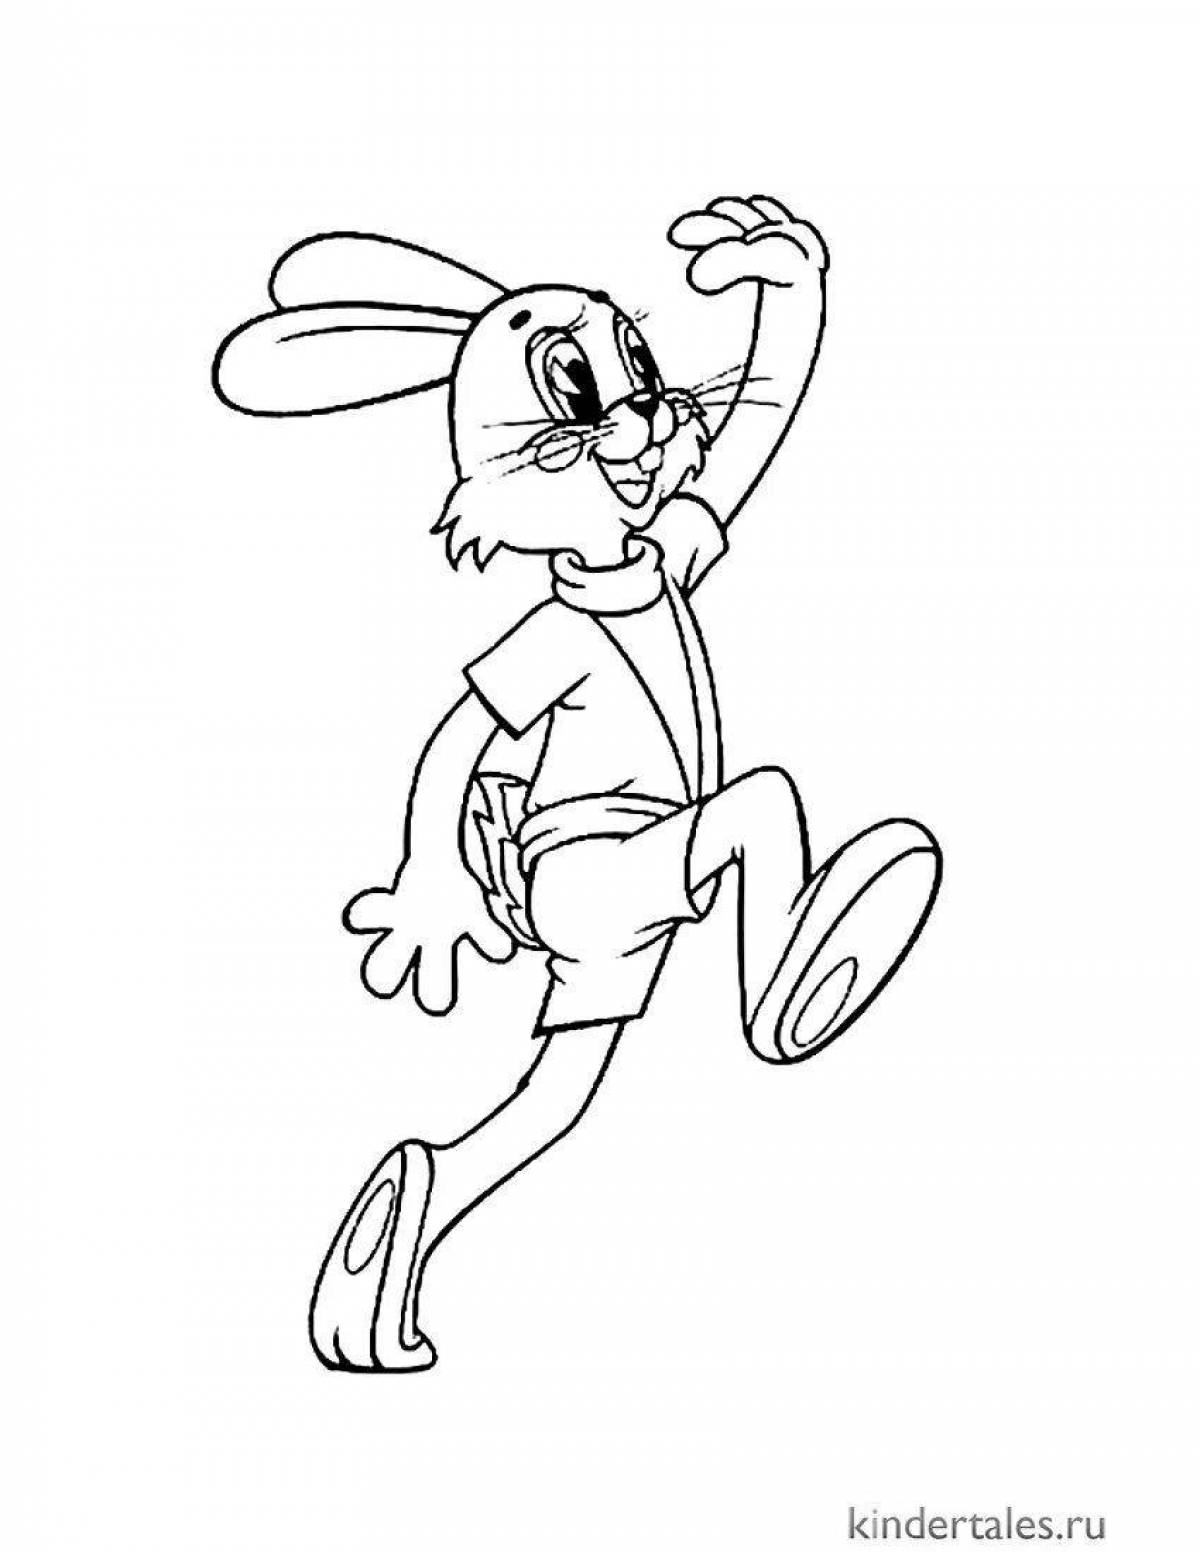 Rampant Bunny Coloring Page